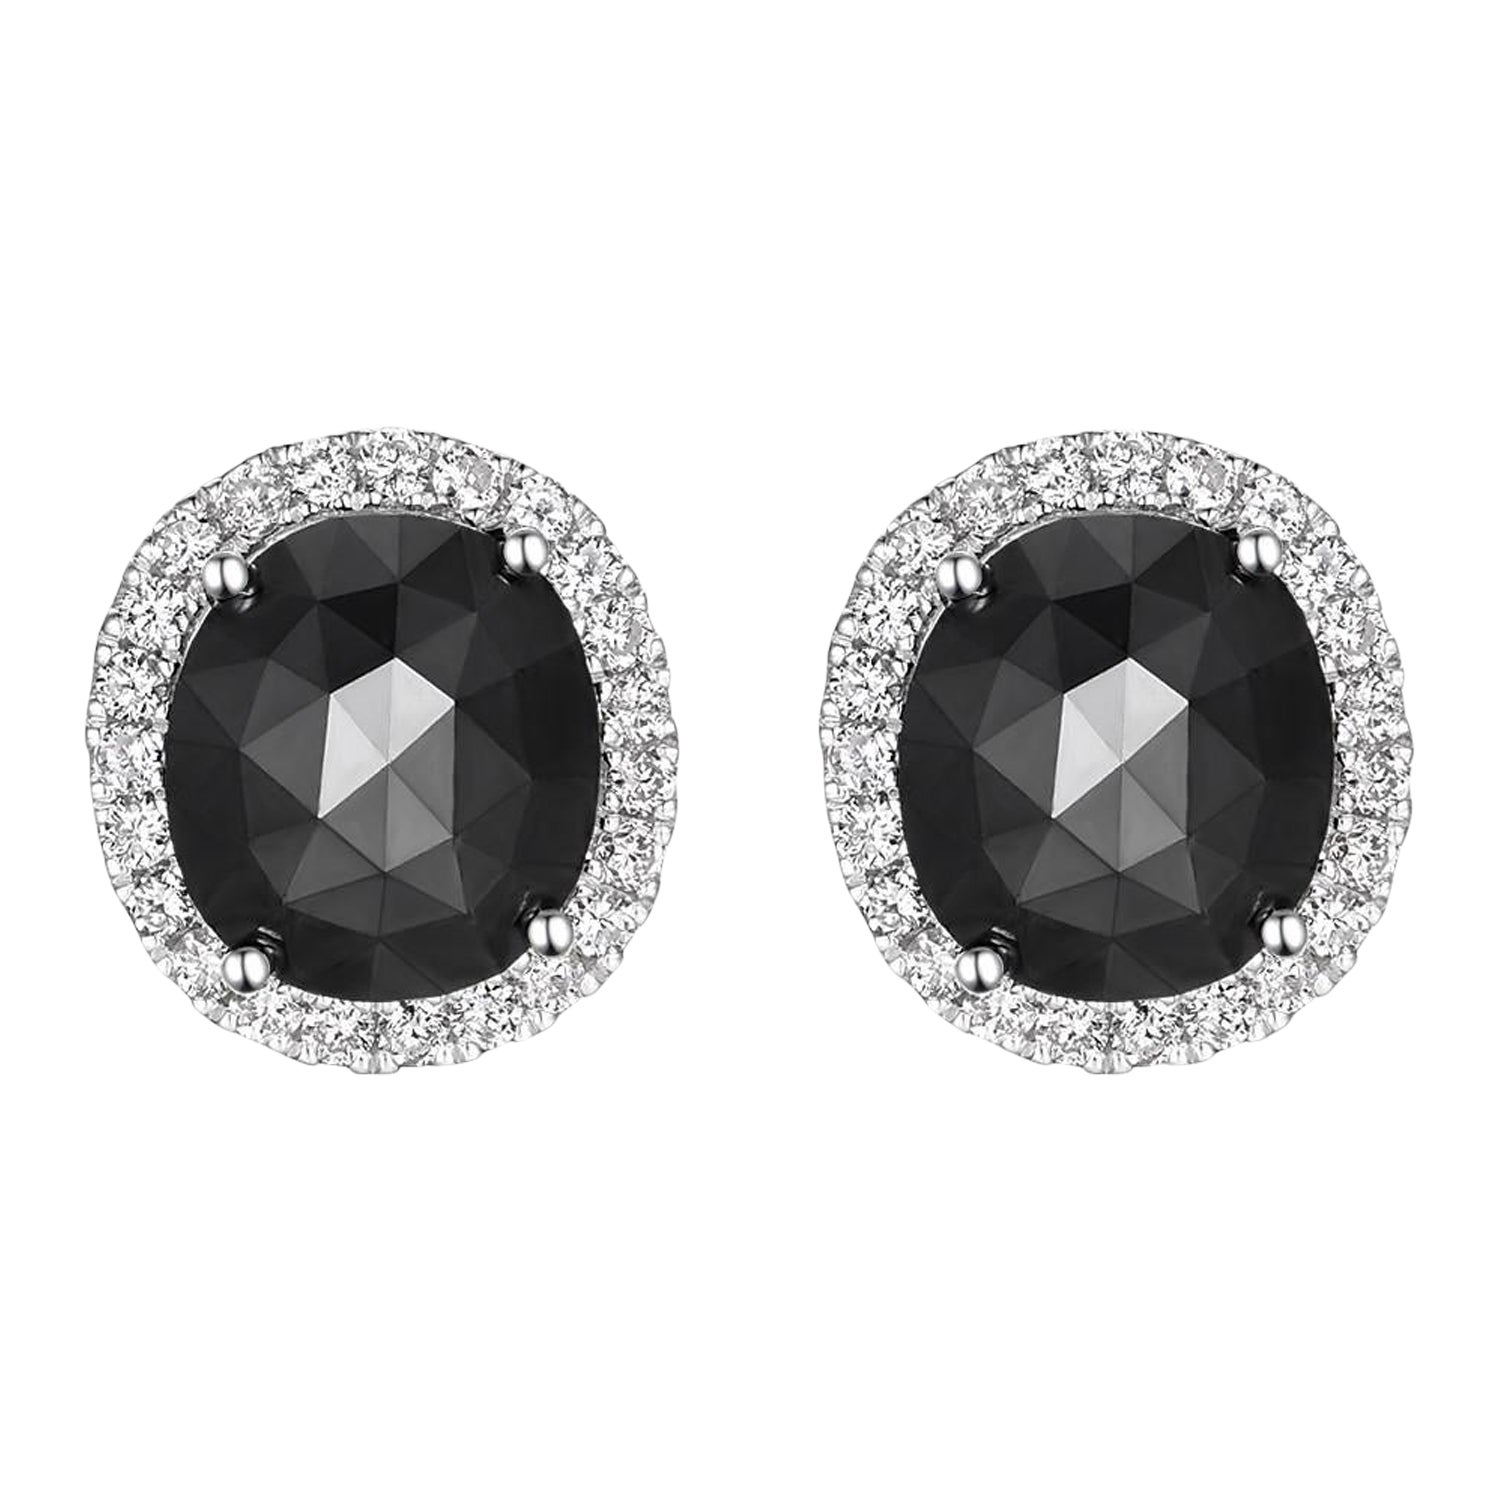 2.29 Carat Rose Cut Black Diamond Stud Earring in 14K White Gold